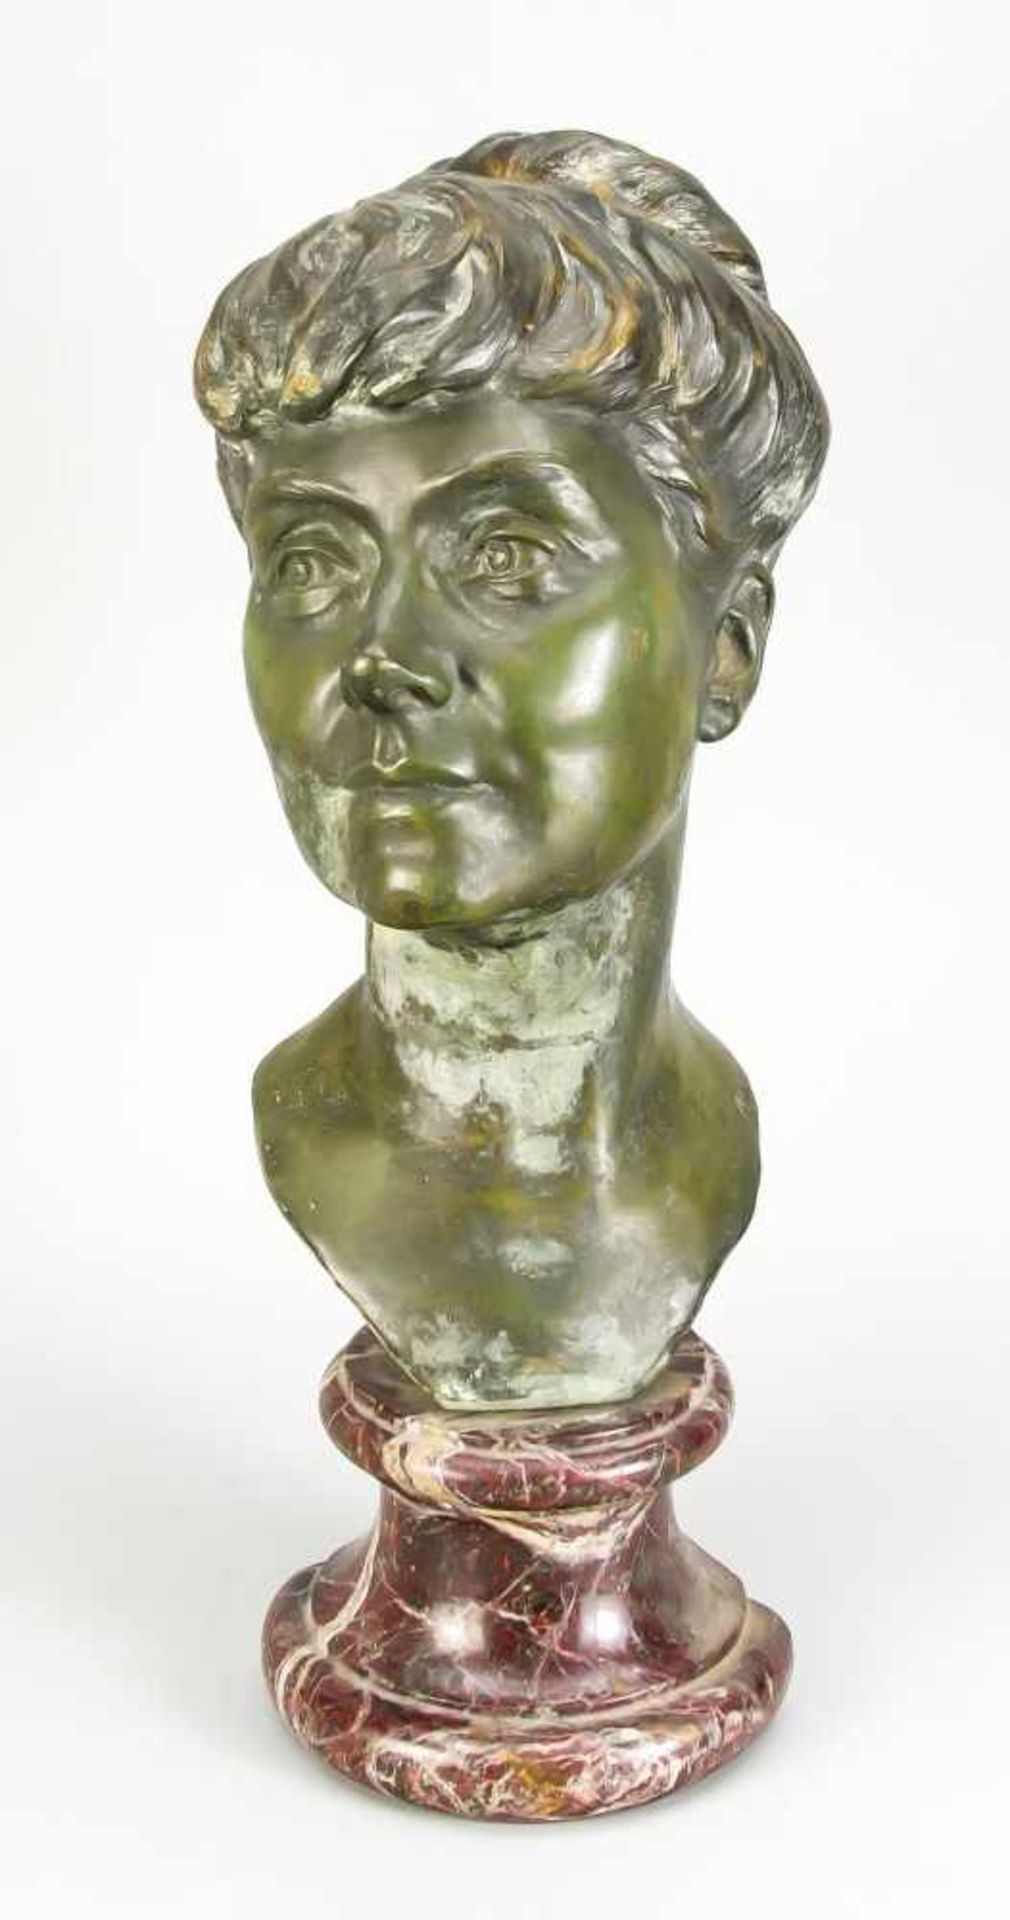 Max Bezner (1883-1953), German sculptor in Berlin, studied with Alfred Boucher in Paris,